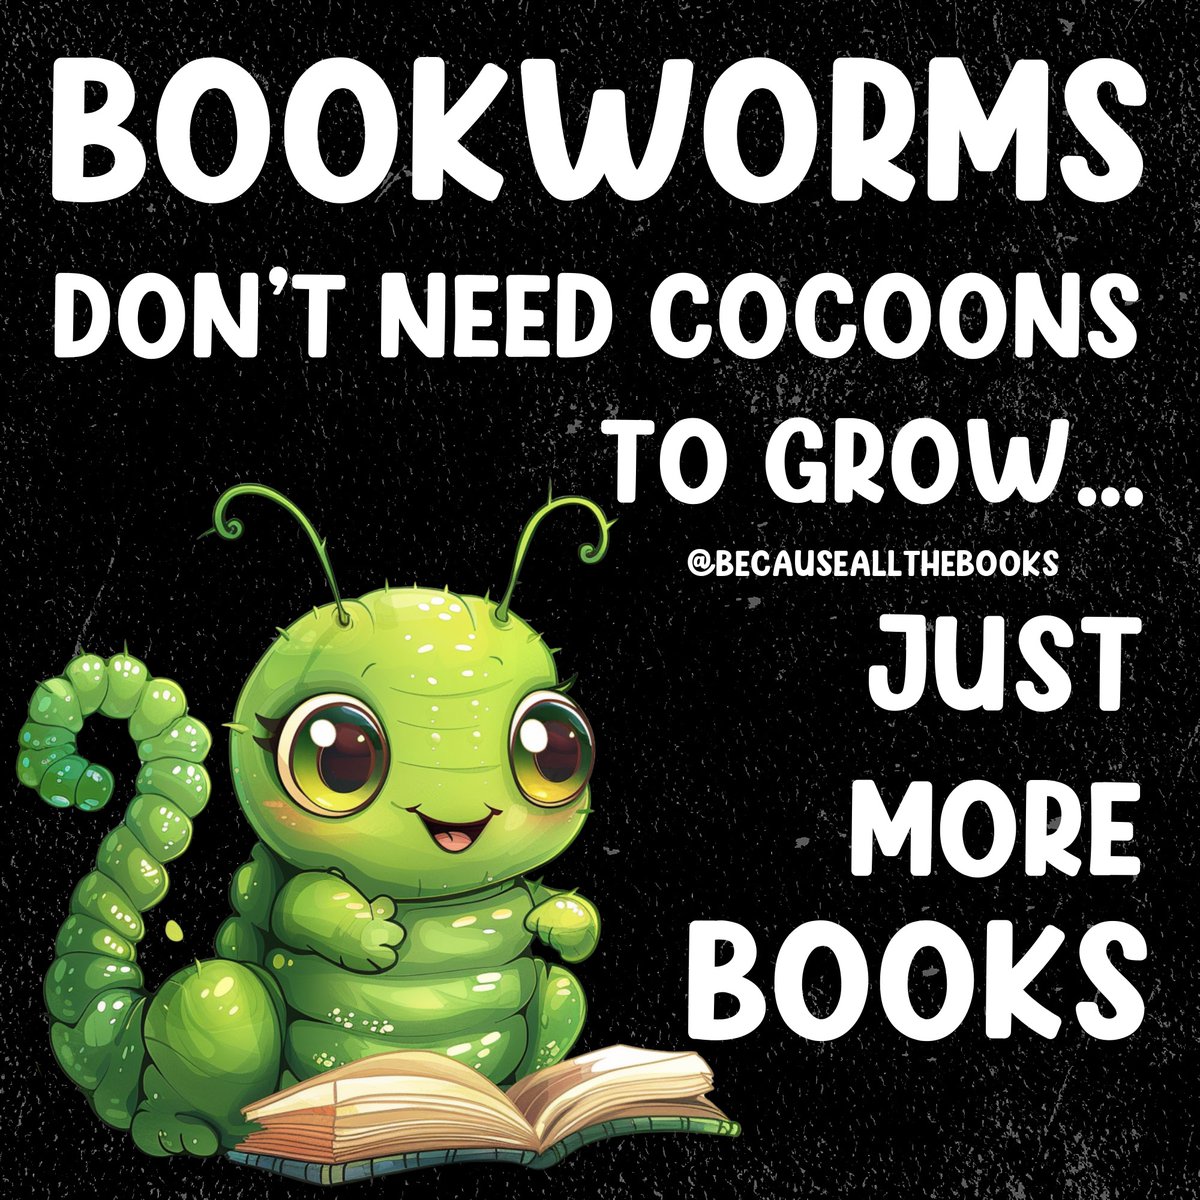 Books make us grow!

#BecauseAllTheBooks #BookwormLife #BookwormForLife #MoreBooks